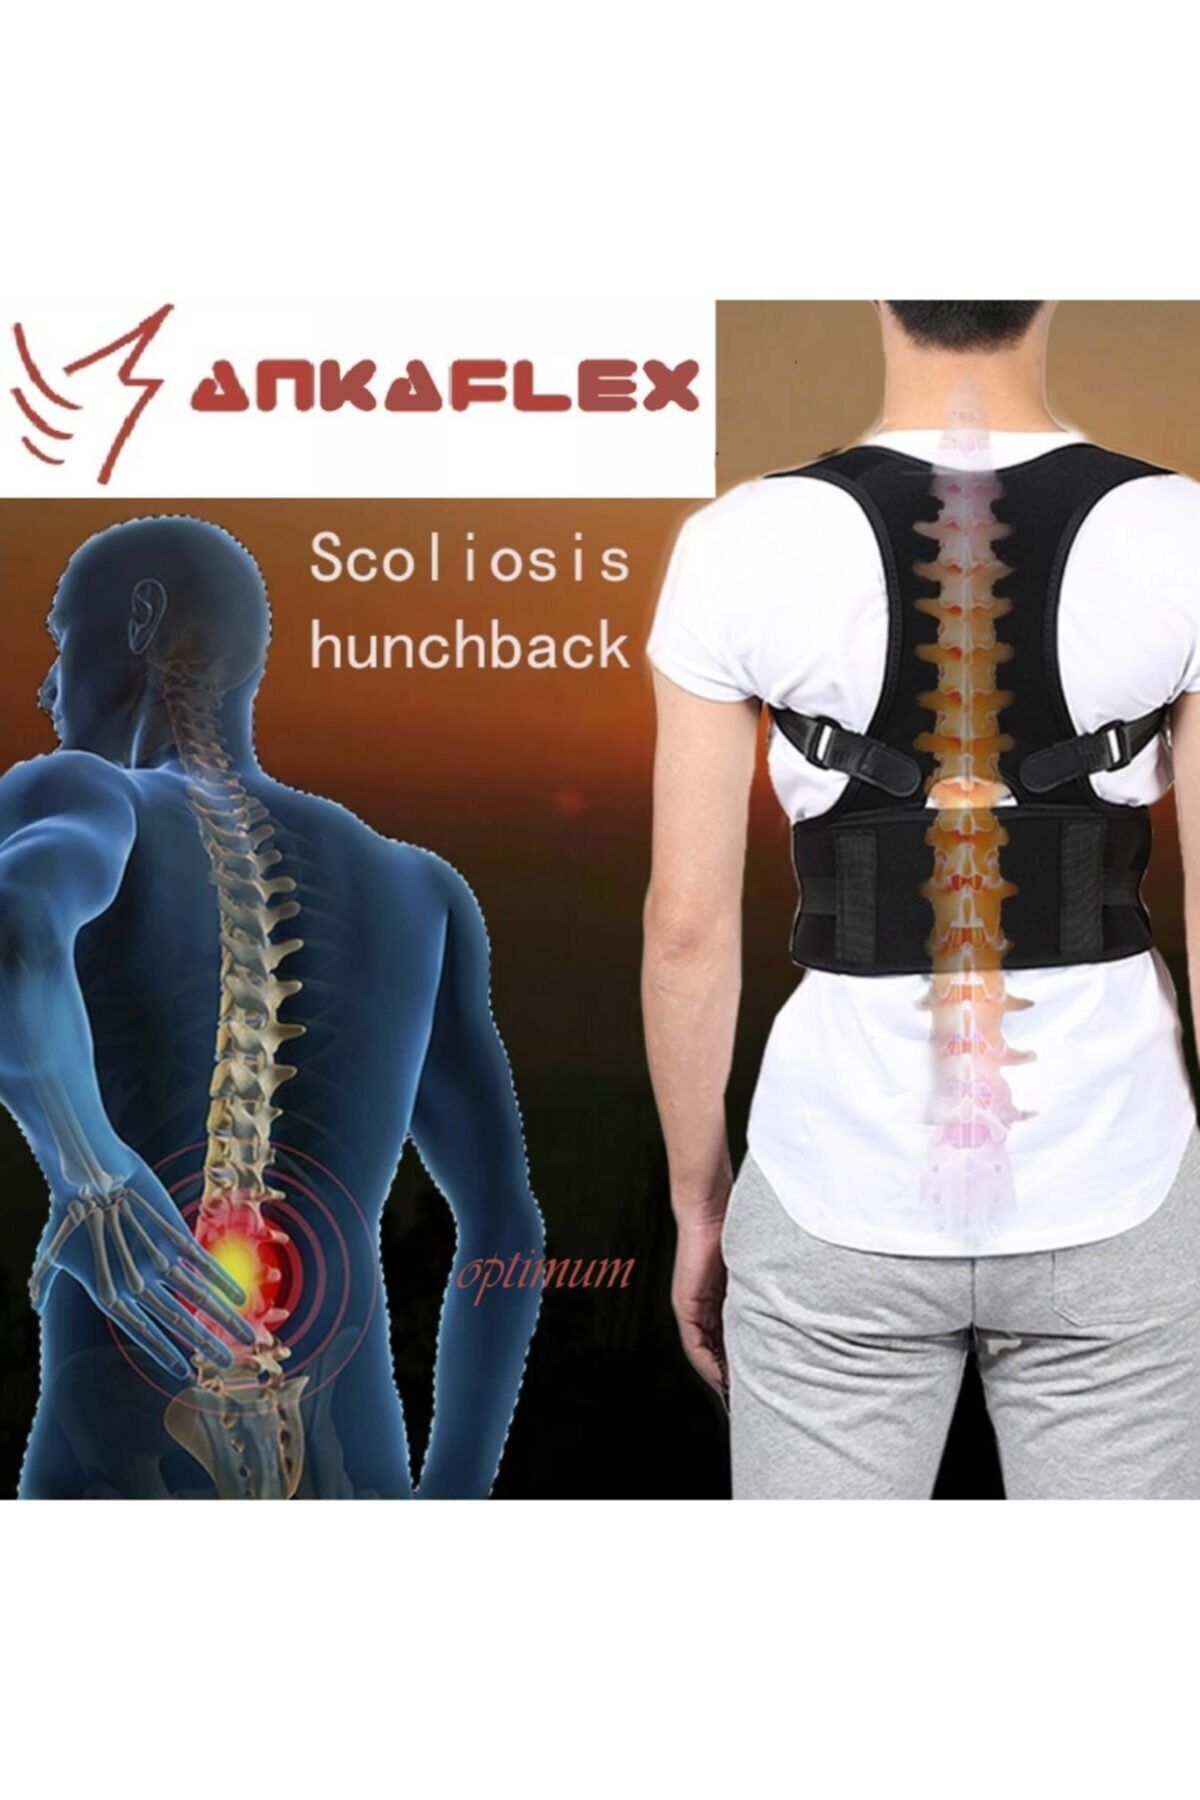 Ankaflex Upright Posture Apparatus Corset for Standing Upright